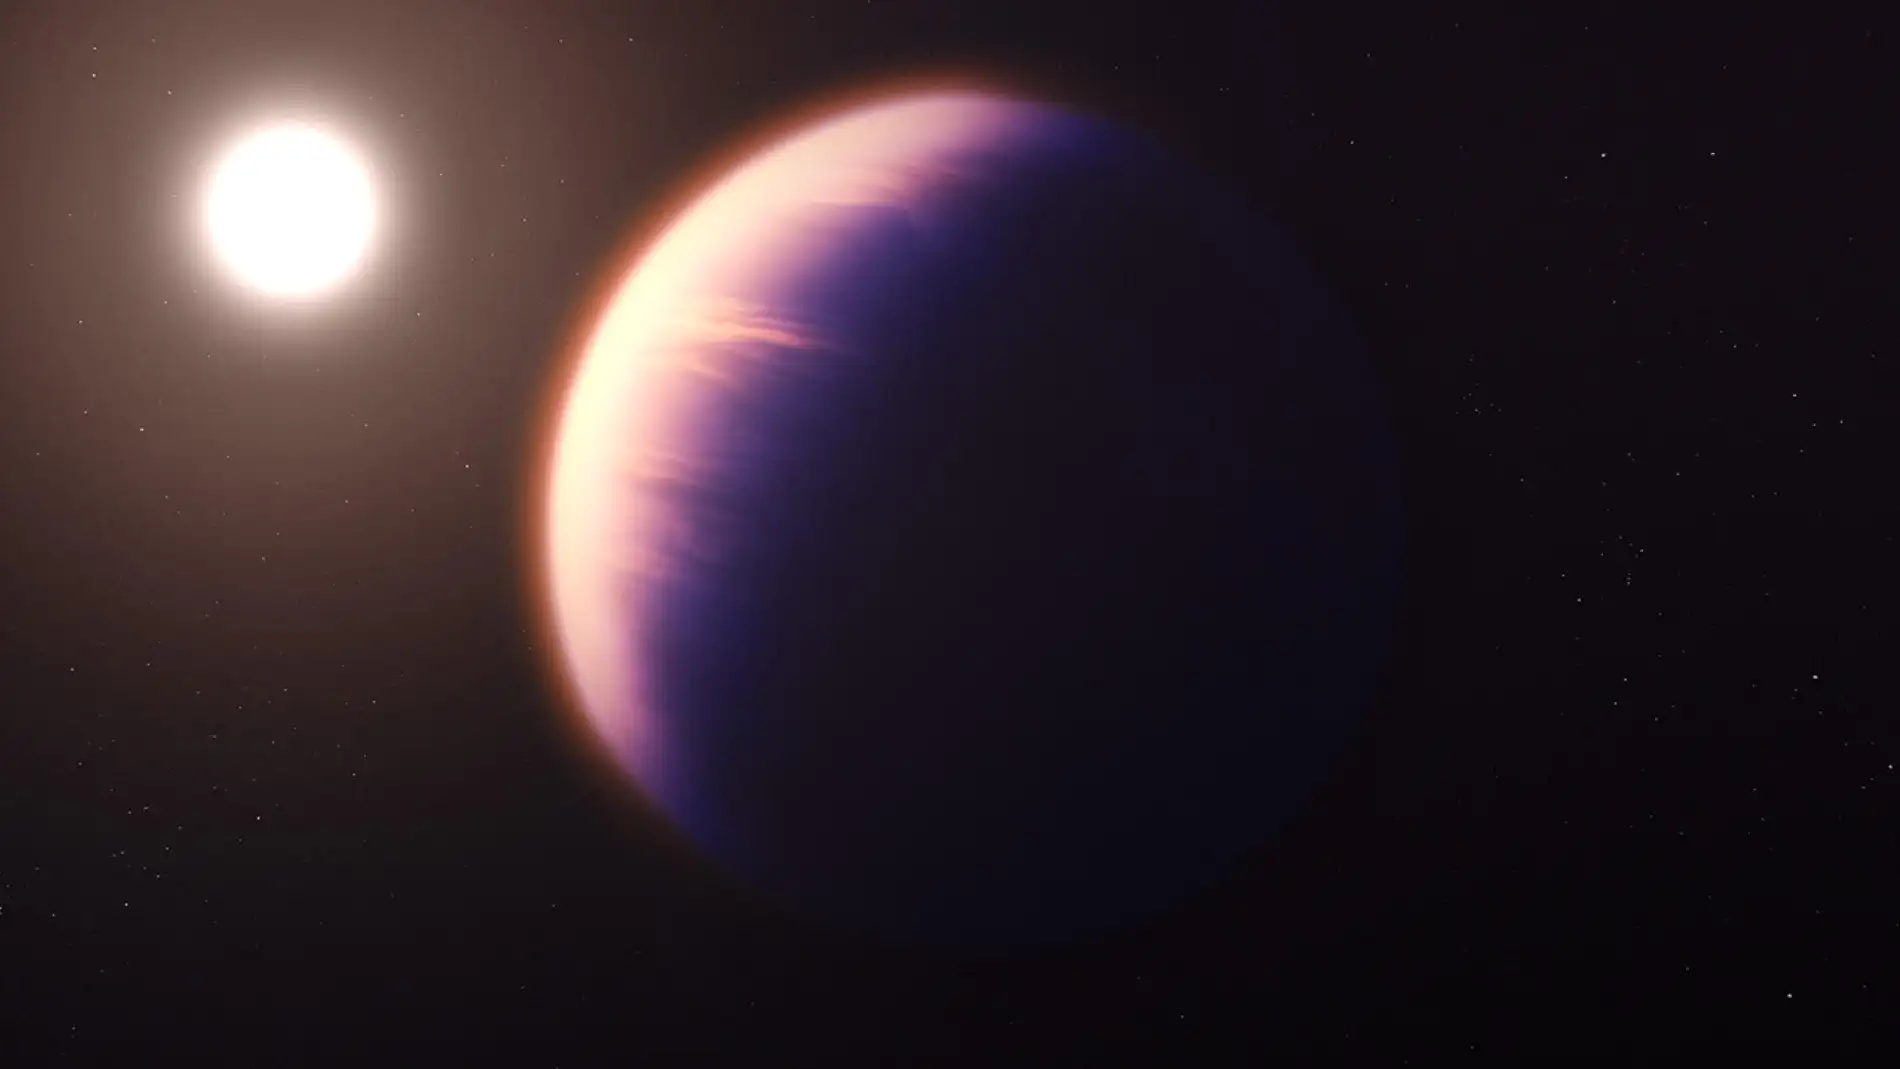 Posible aspecto del exoplaneta WASP-39 b